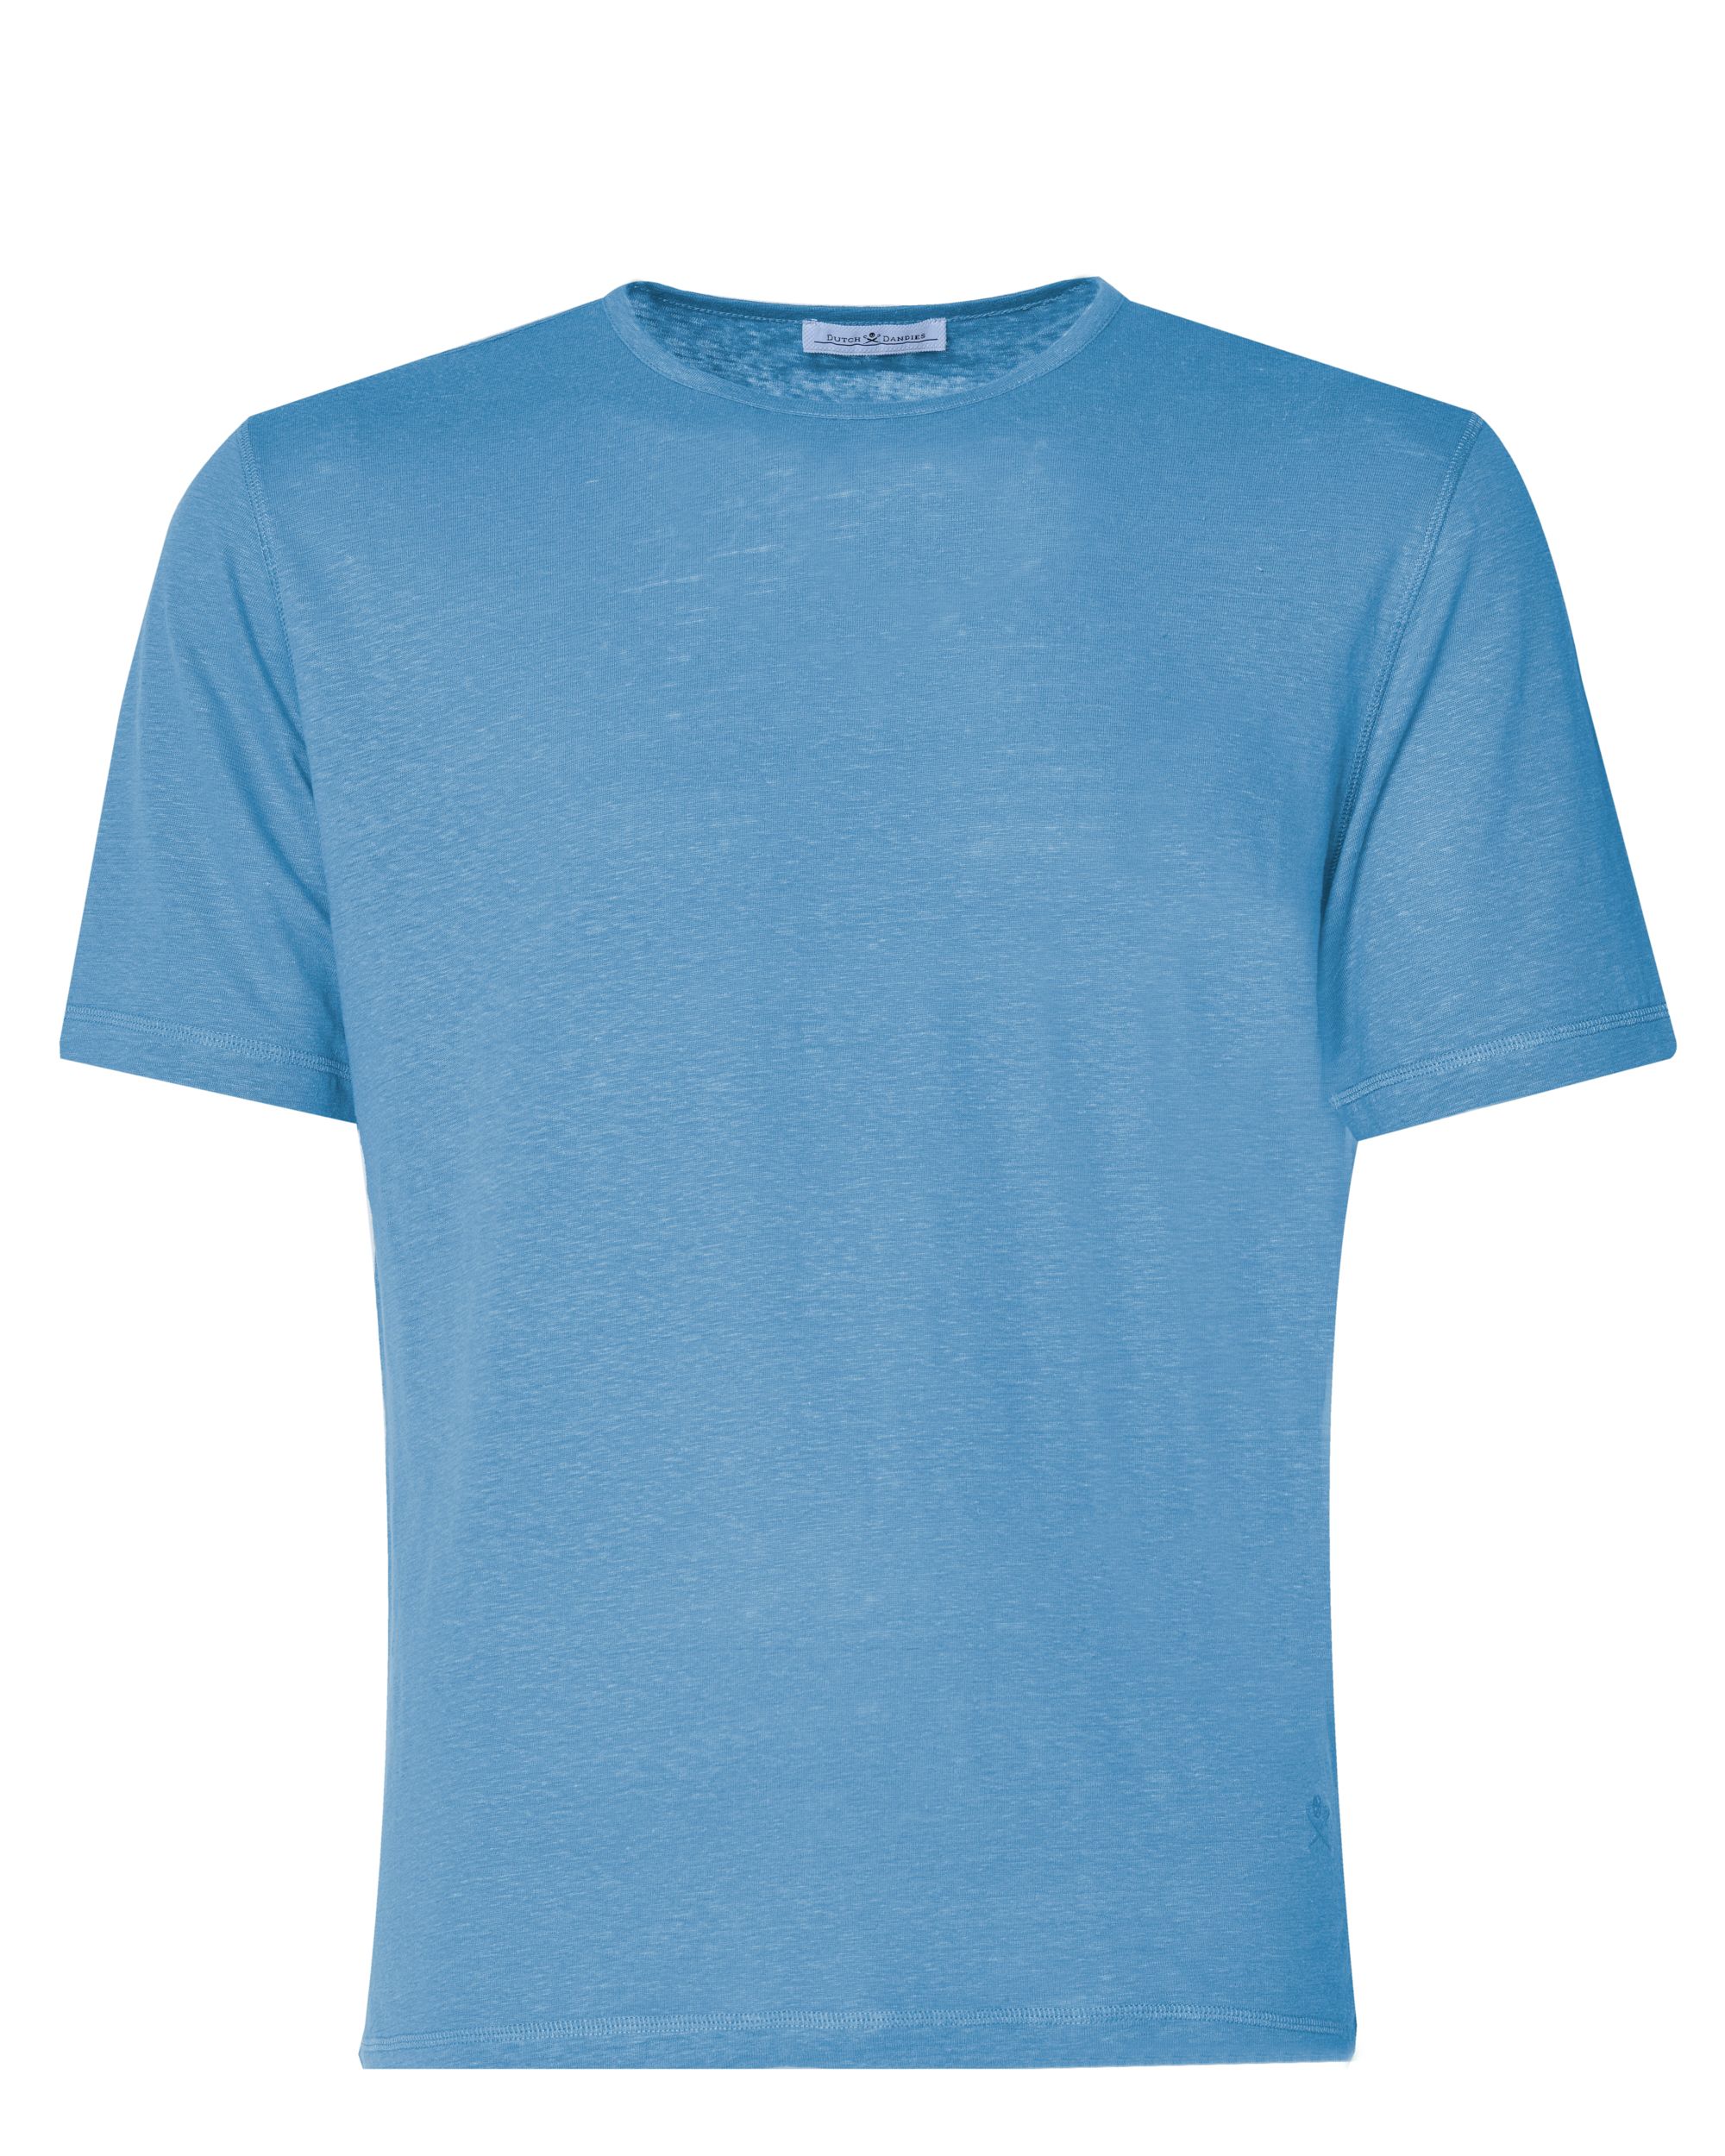 Dutch Dandies Fabio T-shirt KM Adriatic Blue 081419-004-L